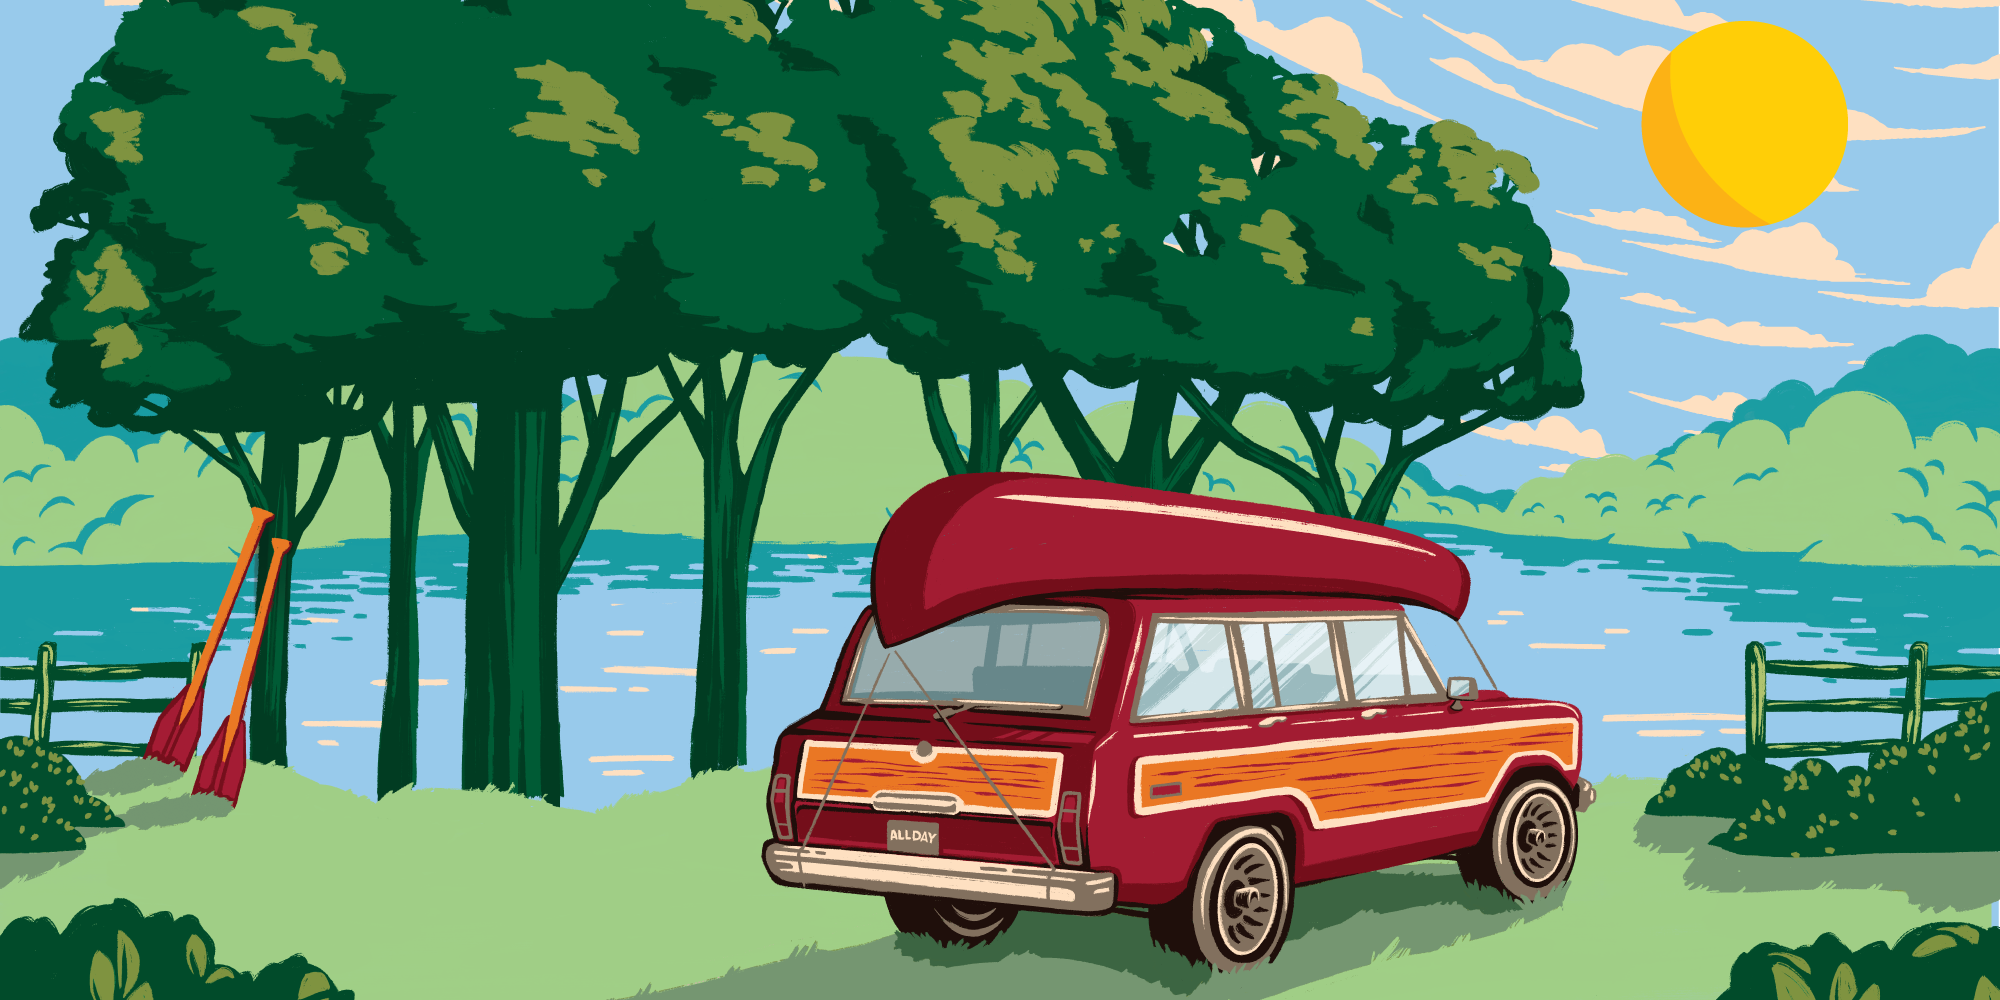 All Day IPA, woody wagon by lake